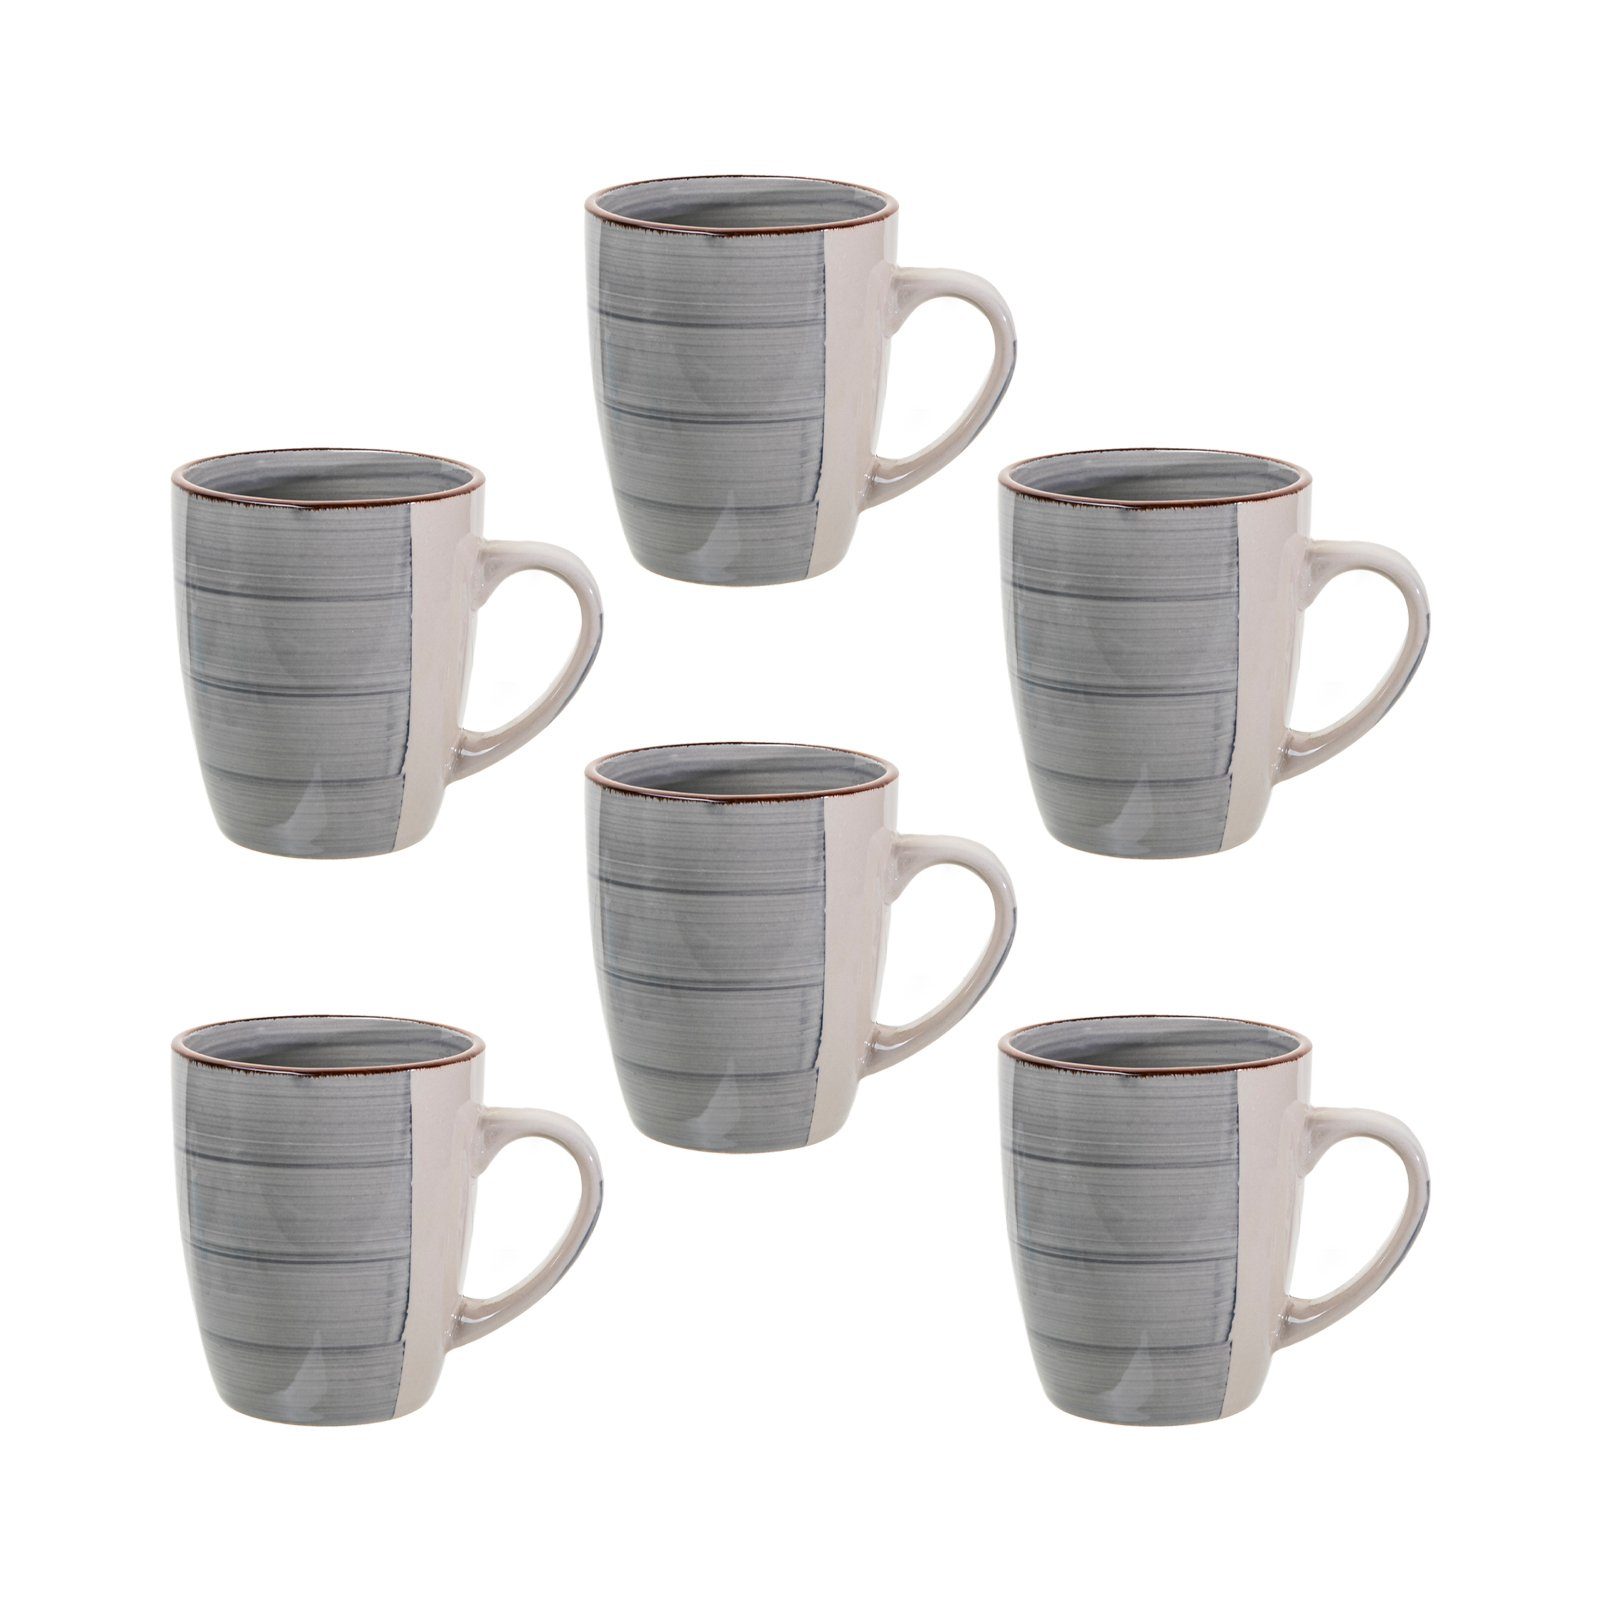 Becher Set Kaffeetassen Tee astor24 Tasse Qualität Kaffee Tassen Keramik, hochwertige in Geschirr, Pott PREMIUM